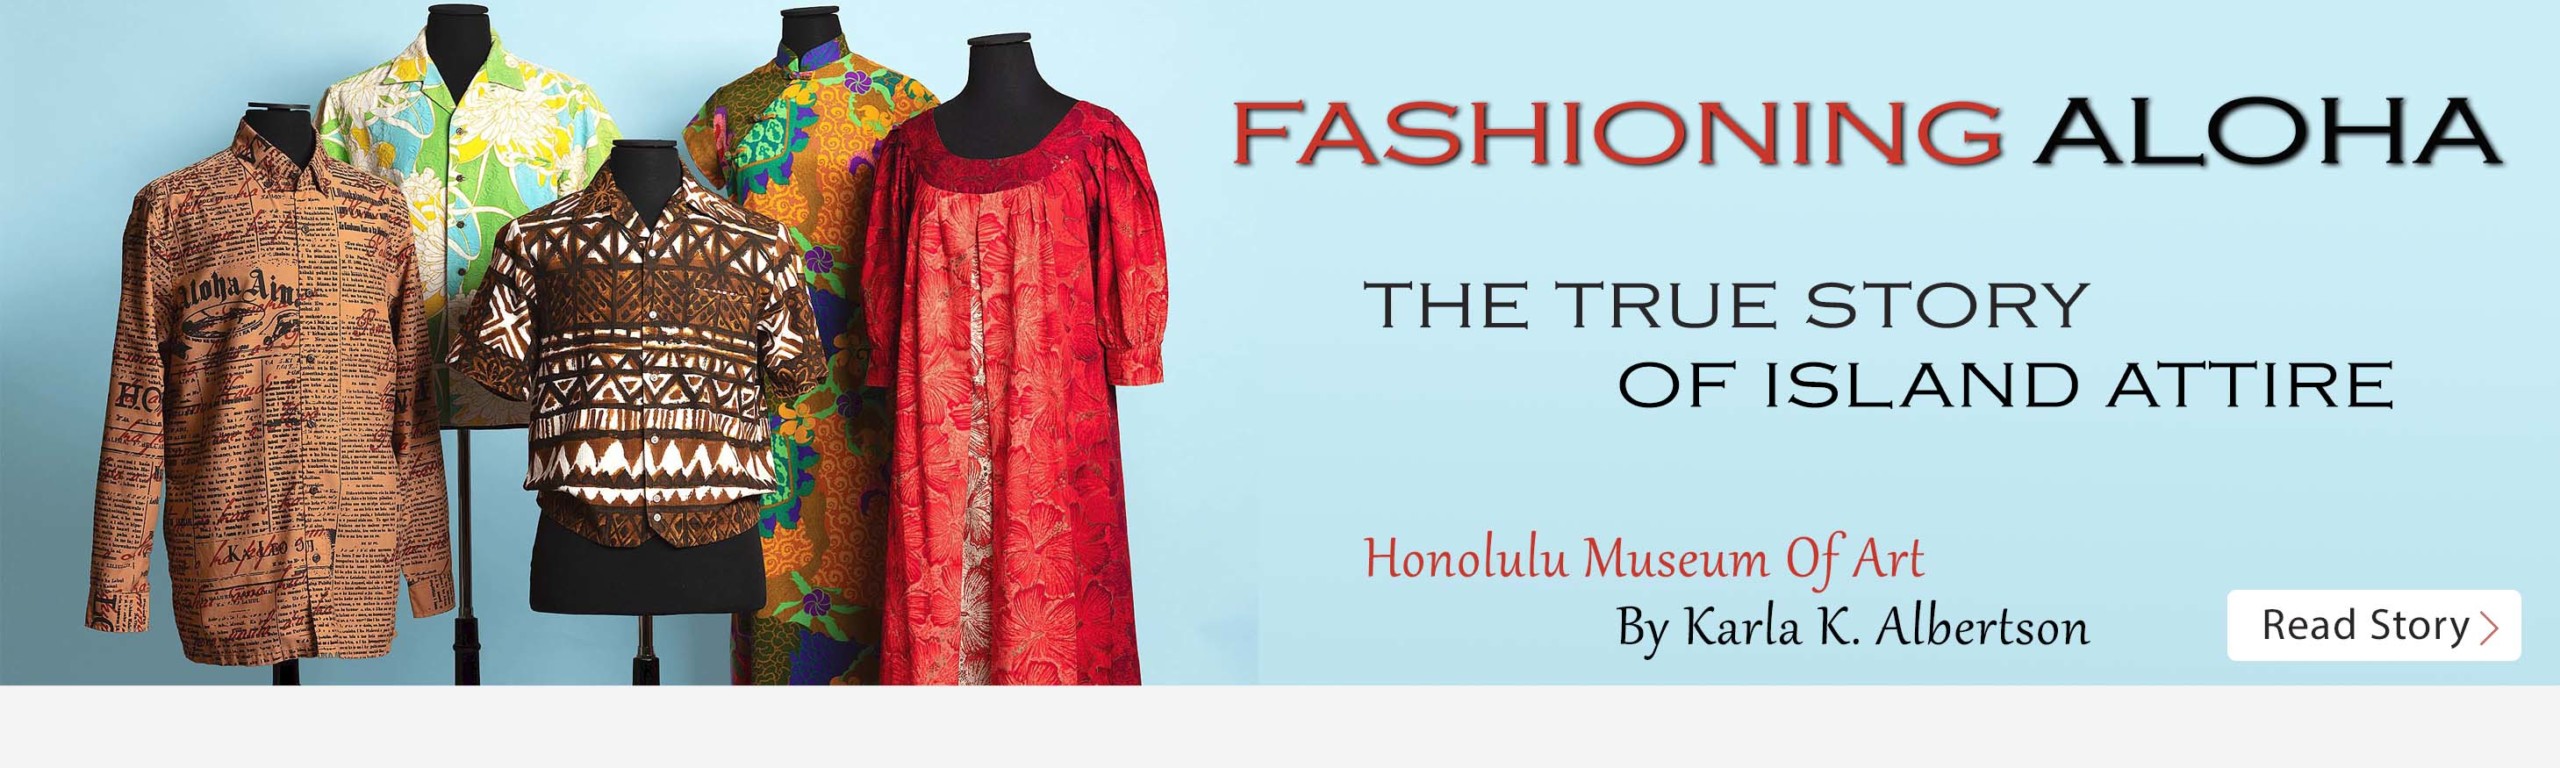 Honolulu Museum Of Art—Fashioning Aloha: The True Story Of Island Attire